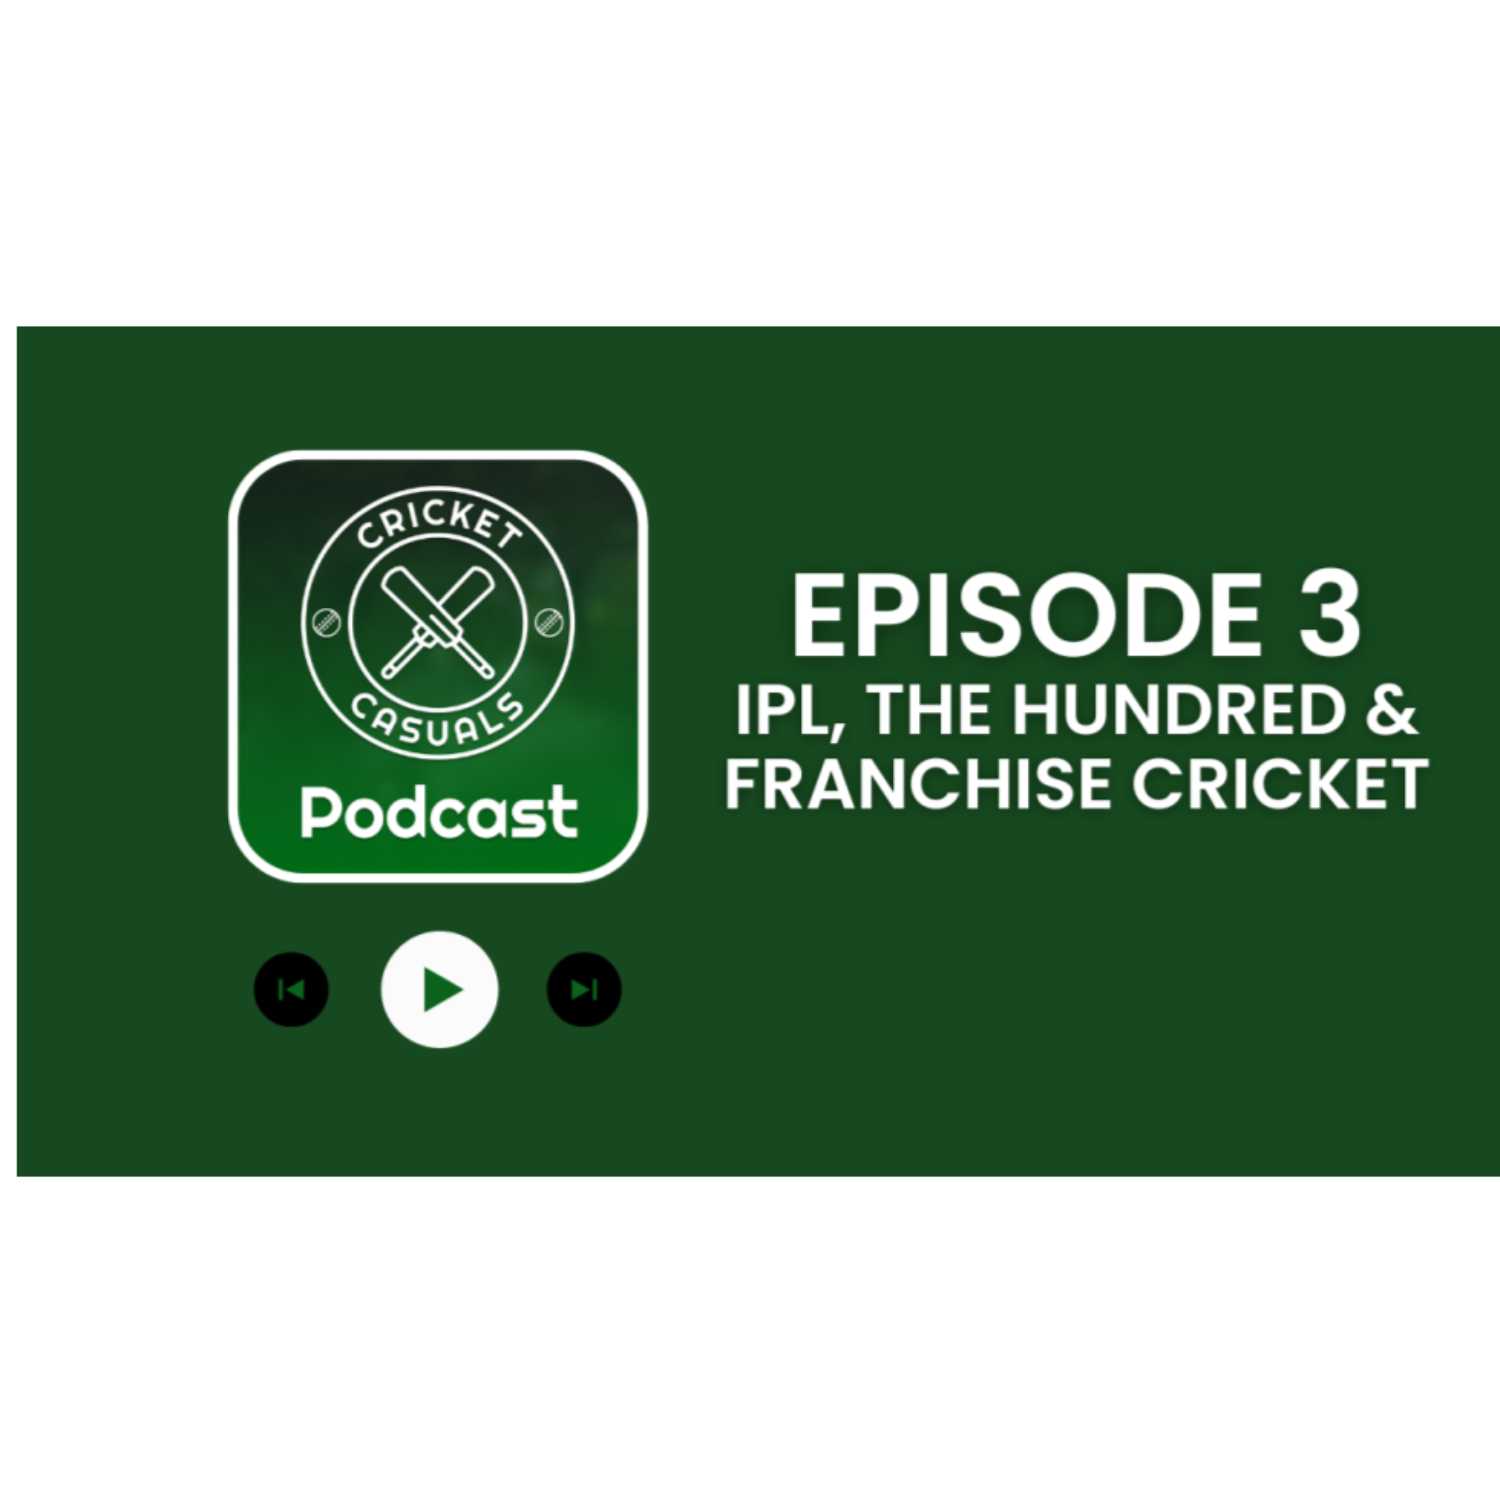 IPL, The Hundred & Franchise Cricket